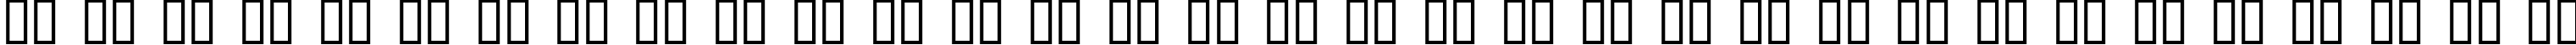 Пример написания русского алфавита шрифтом Angie BareFoot